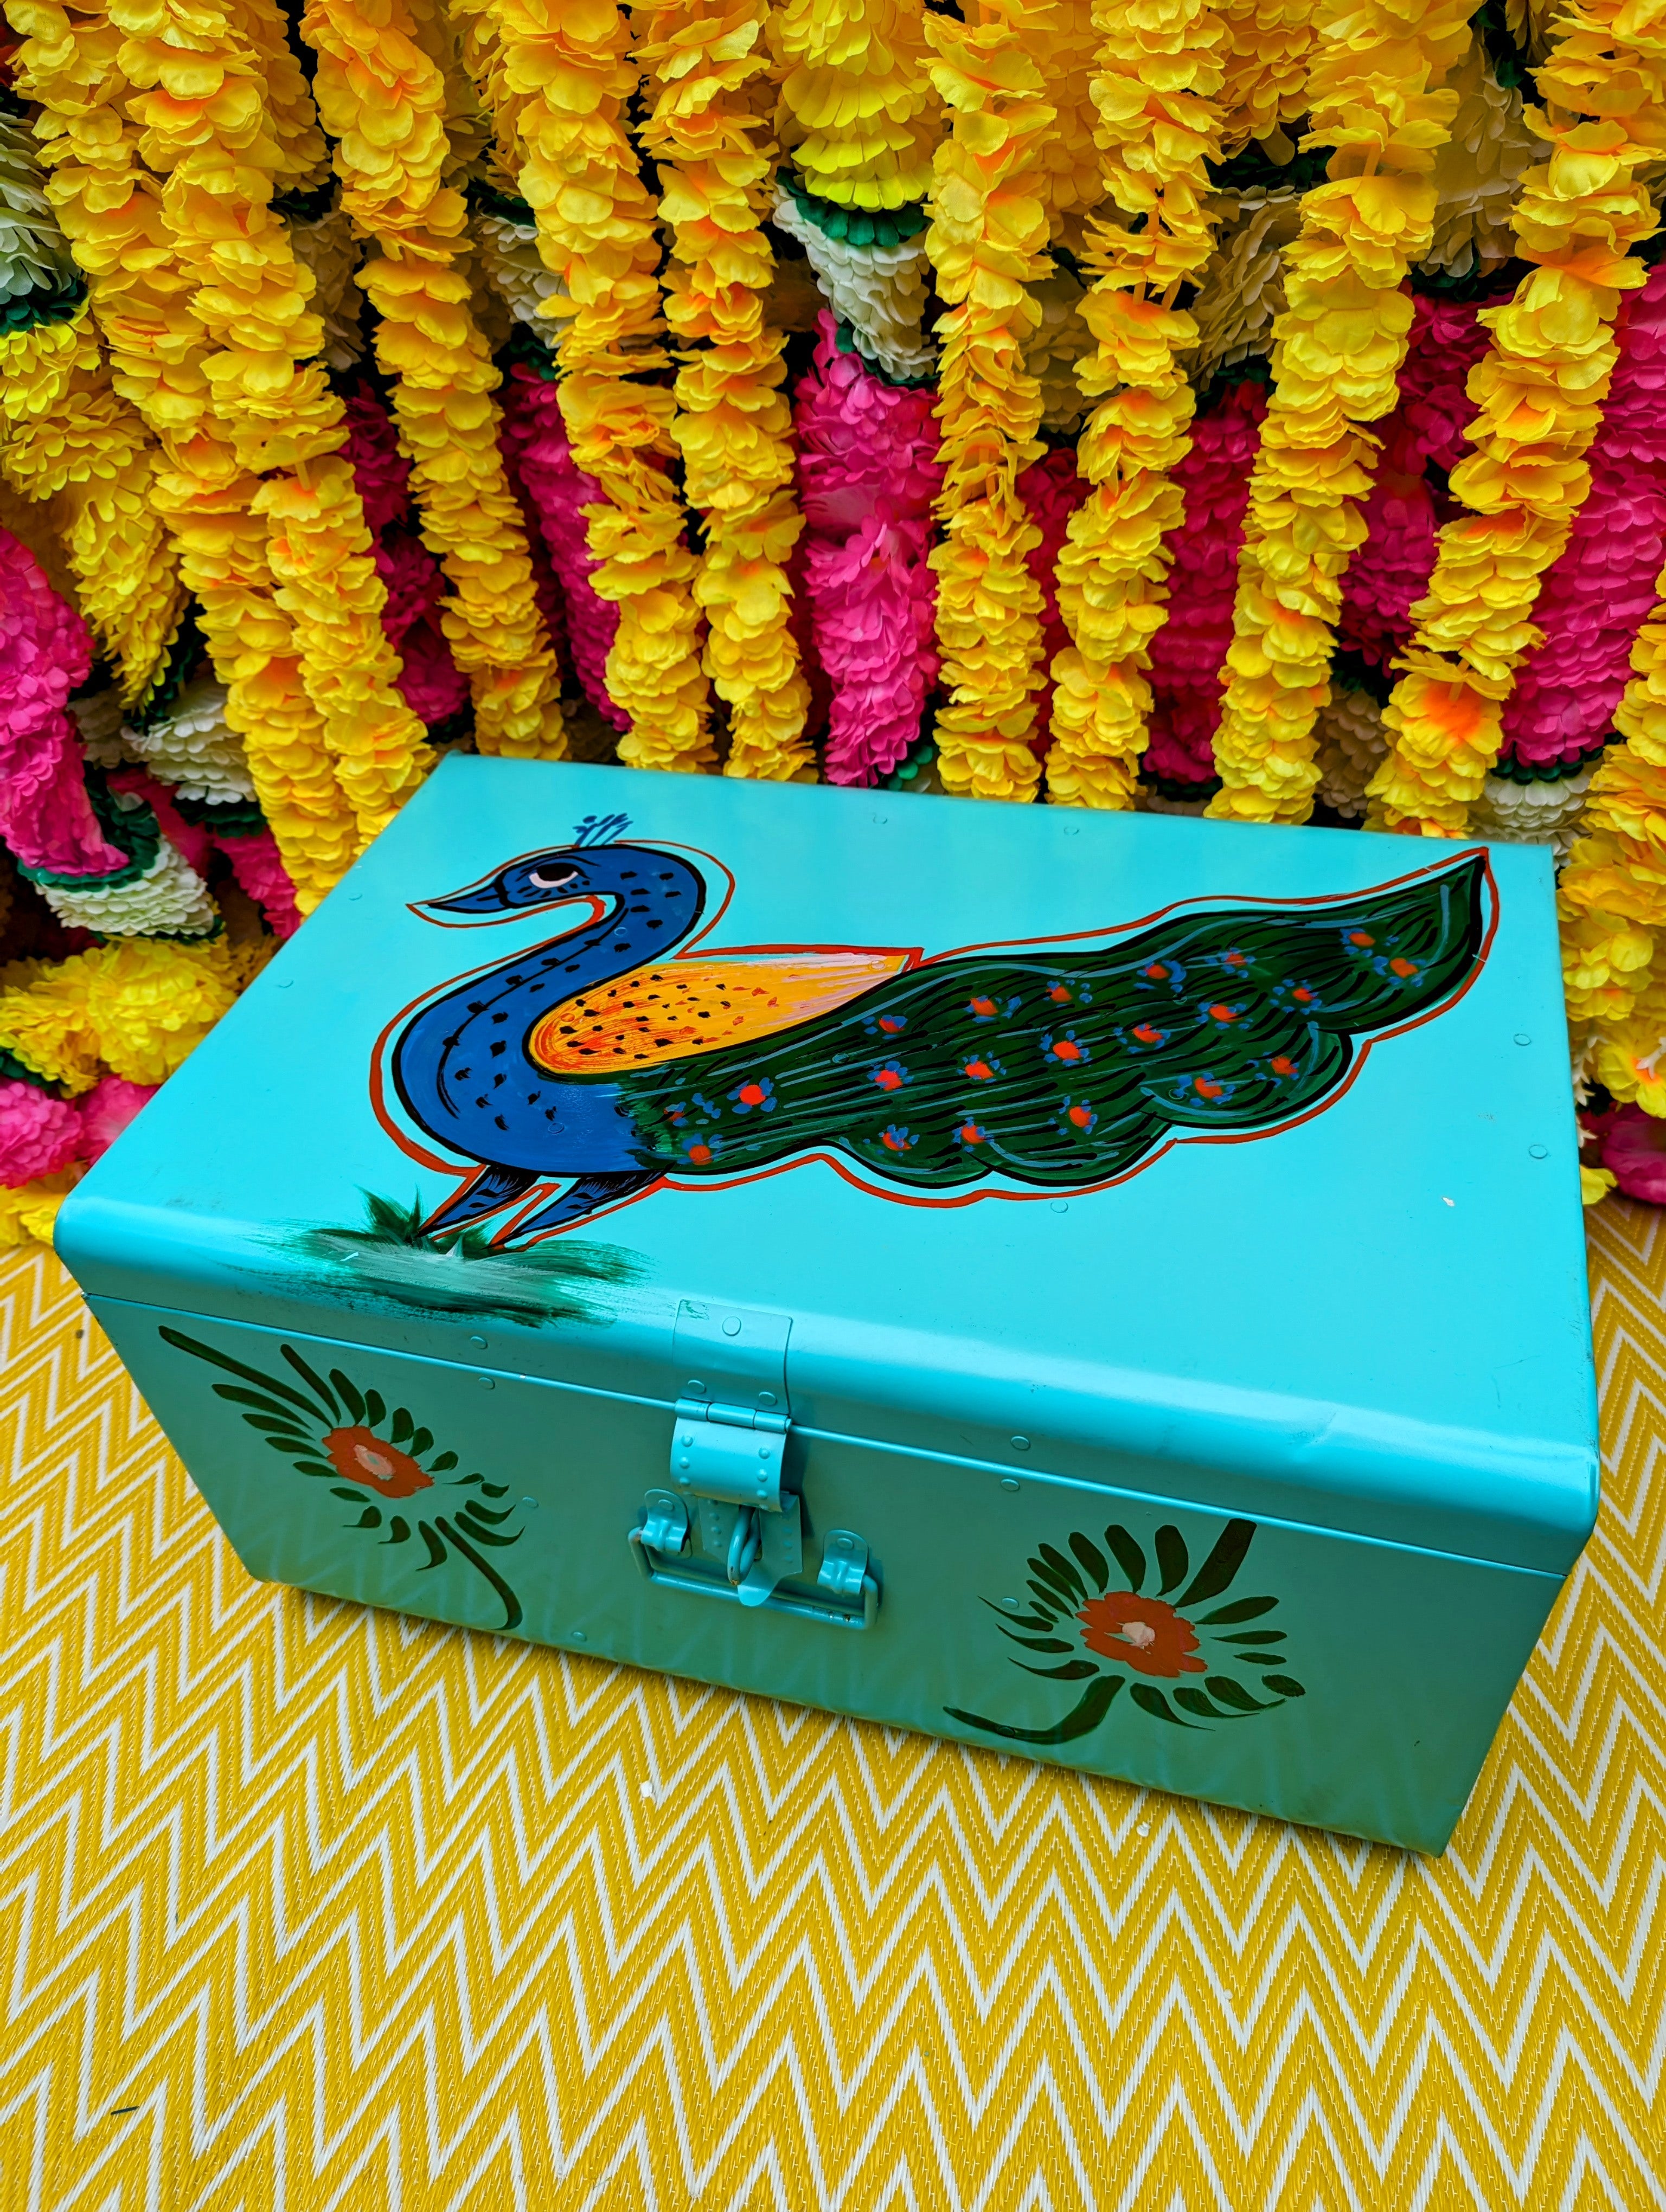 Indian truck art trunks - Peacock